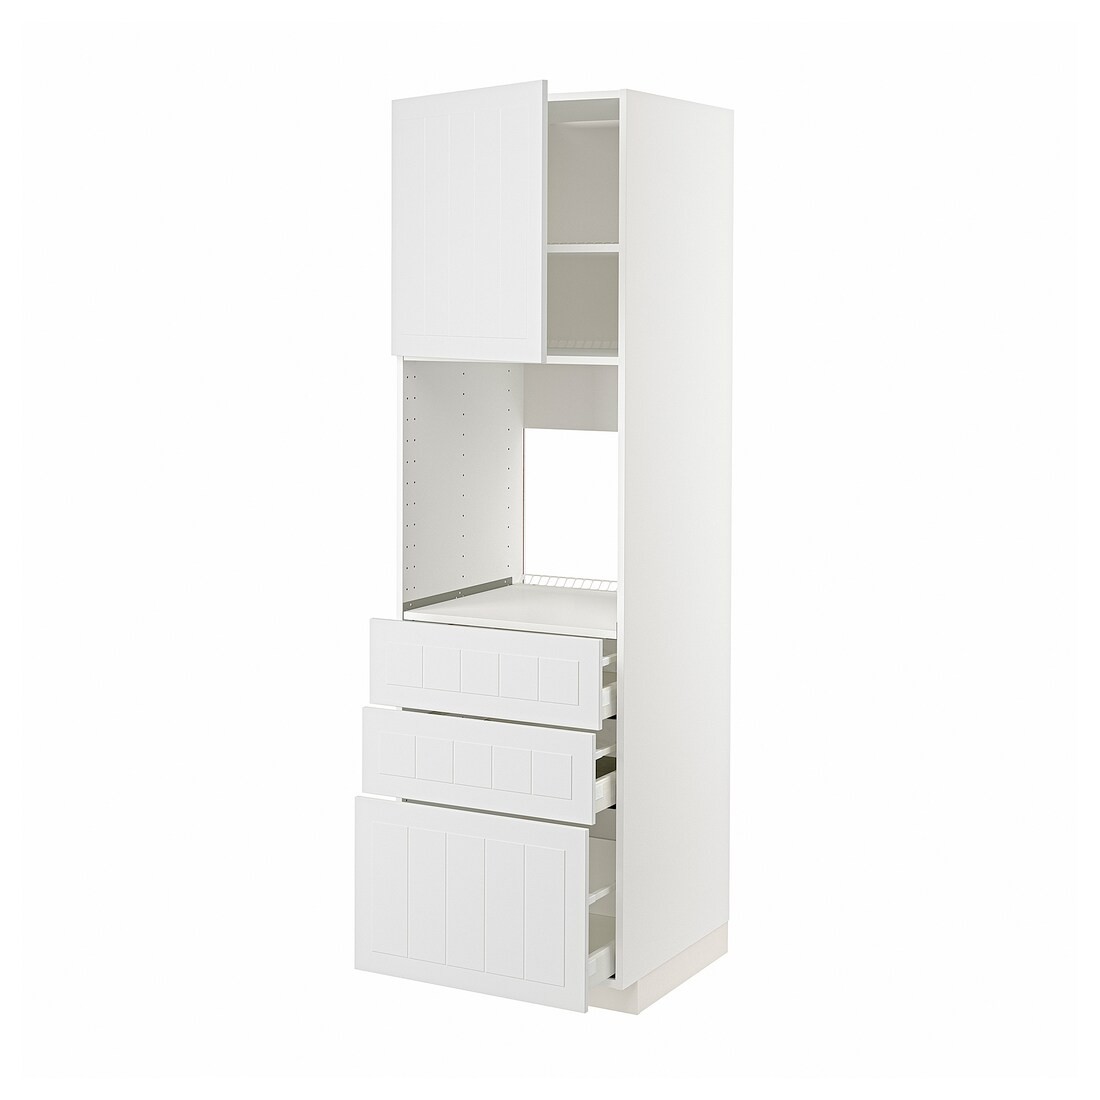 IKEA METOD МЕТОД / MAXIMERA МАКСИМЕРА Высокий шкаф для духовки, белый / Stensund белый, 60x60x200 см 79470093 794.700.93